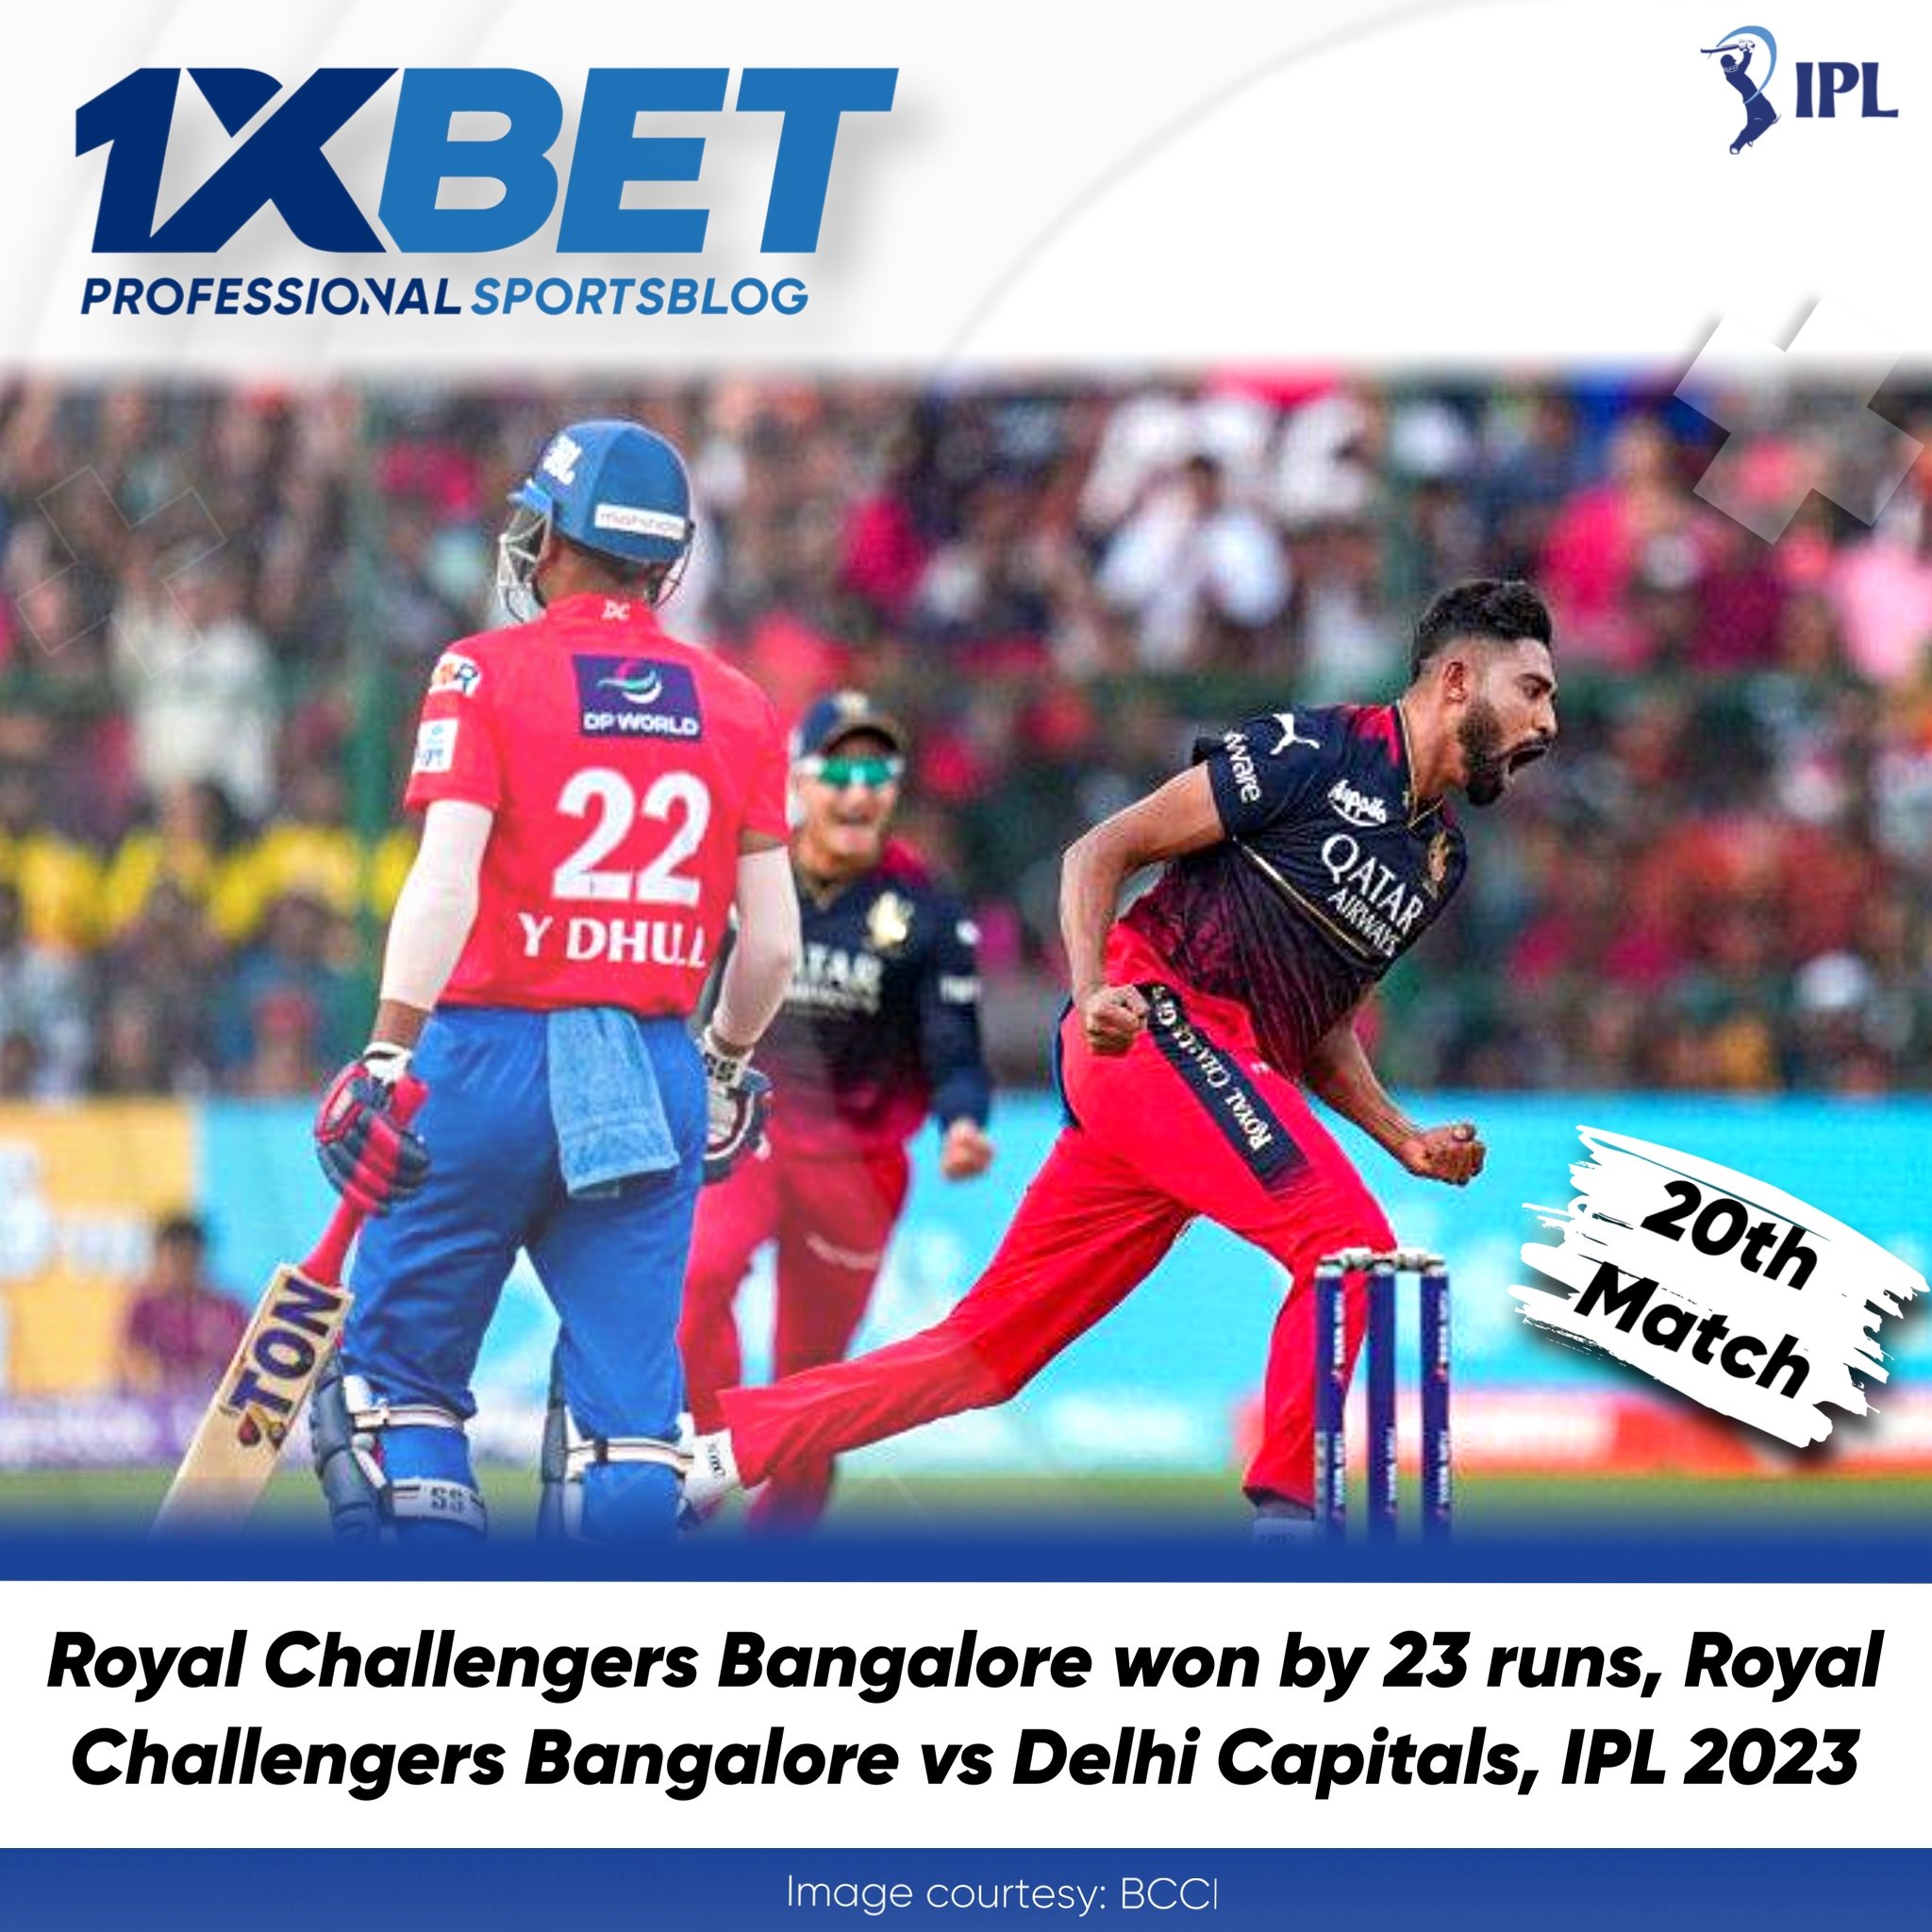 Royal Challengers Bangalore won by 23 runs